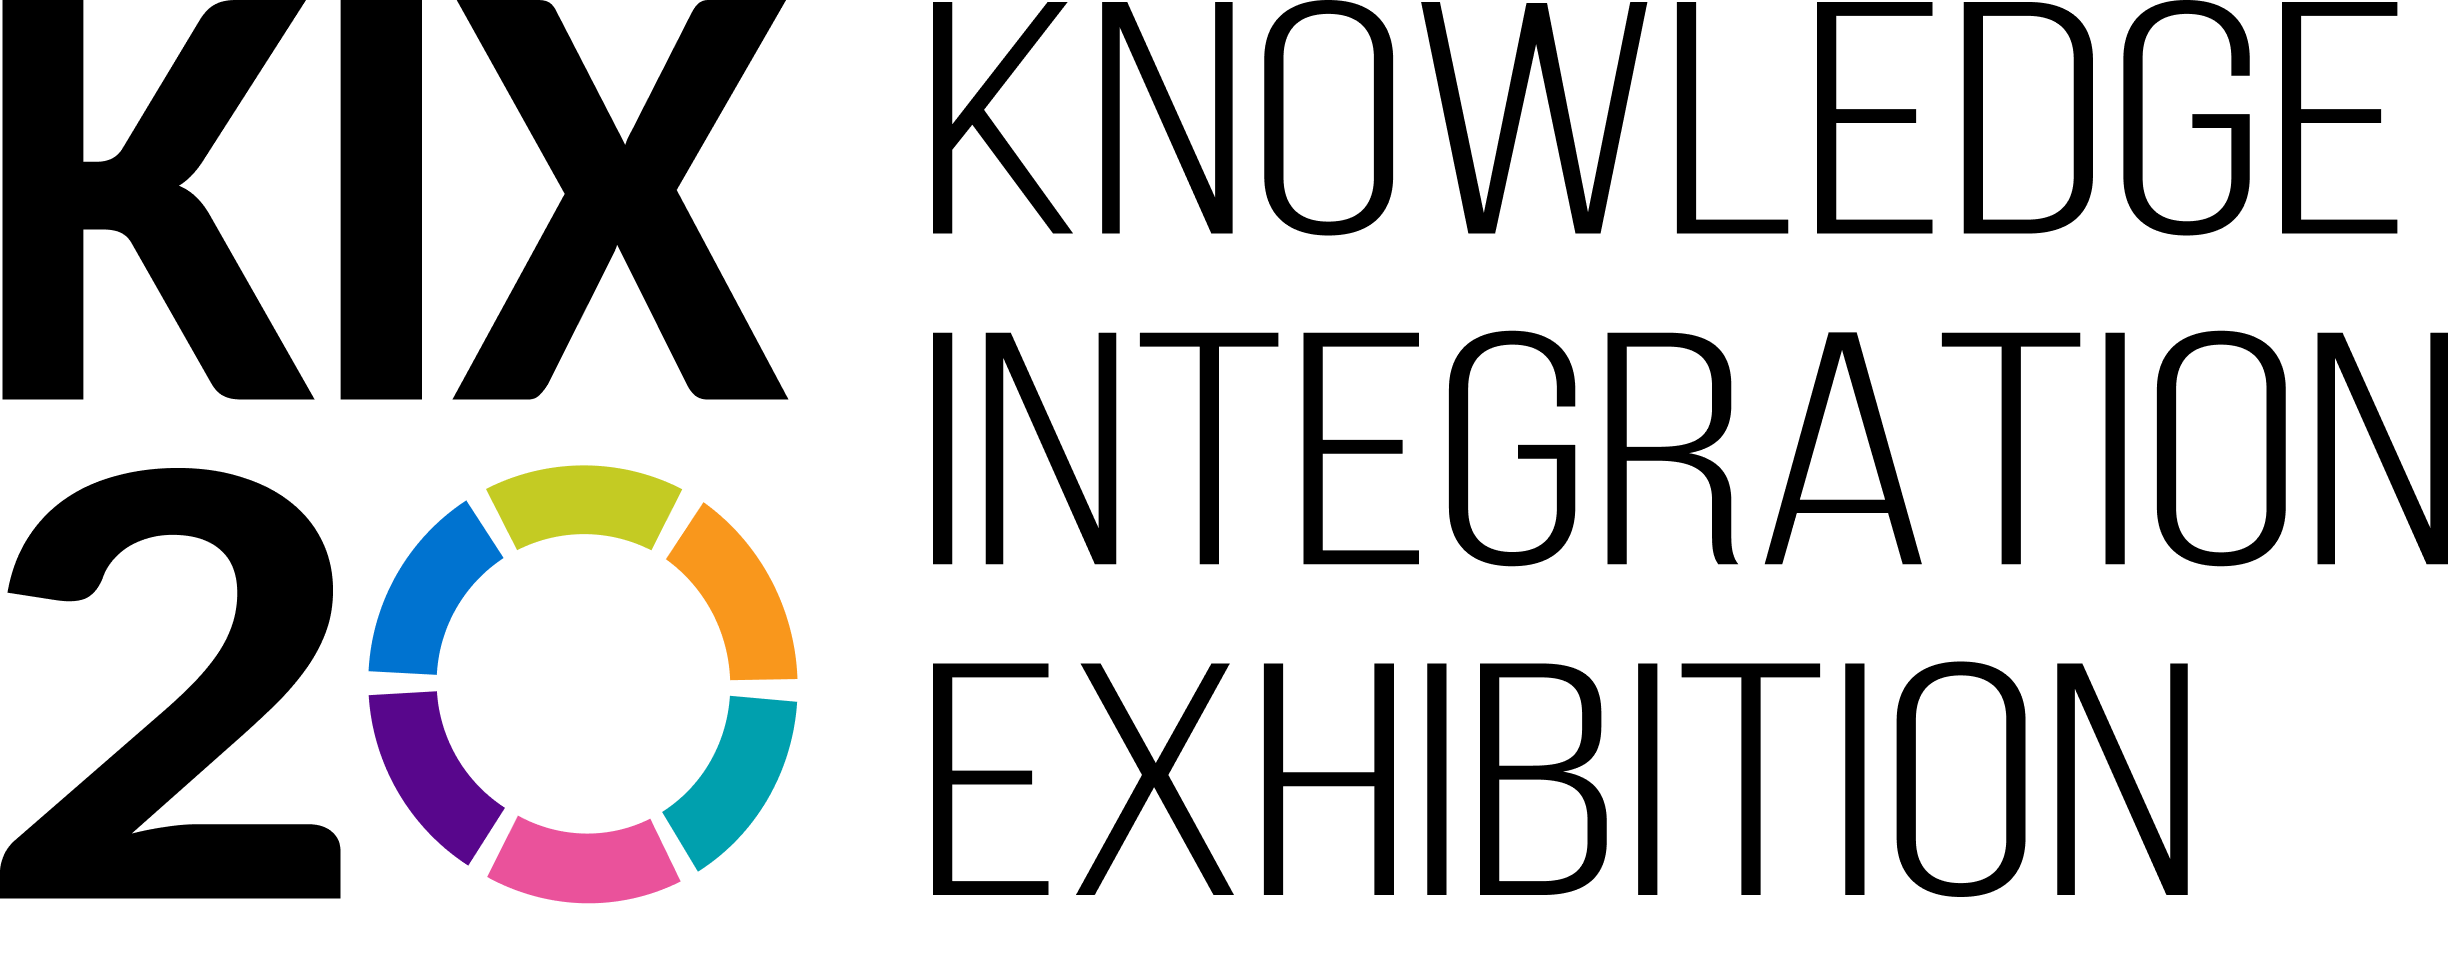 KIX 2020 logo